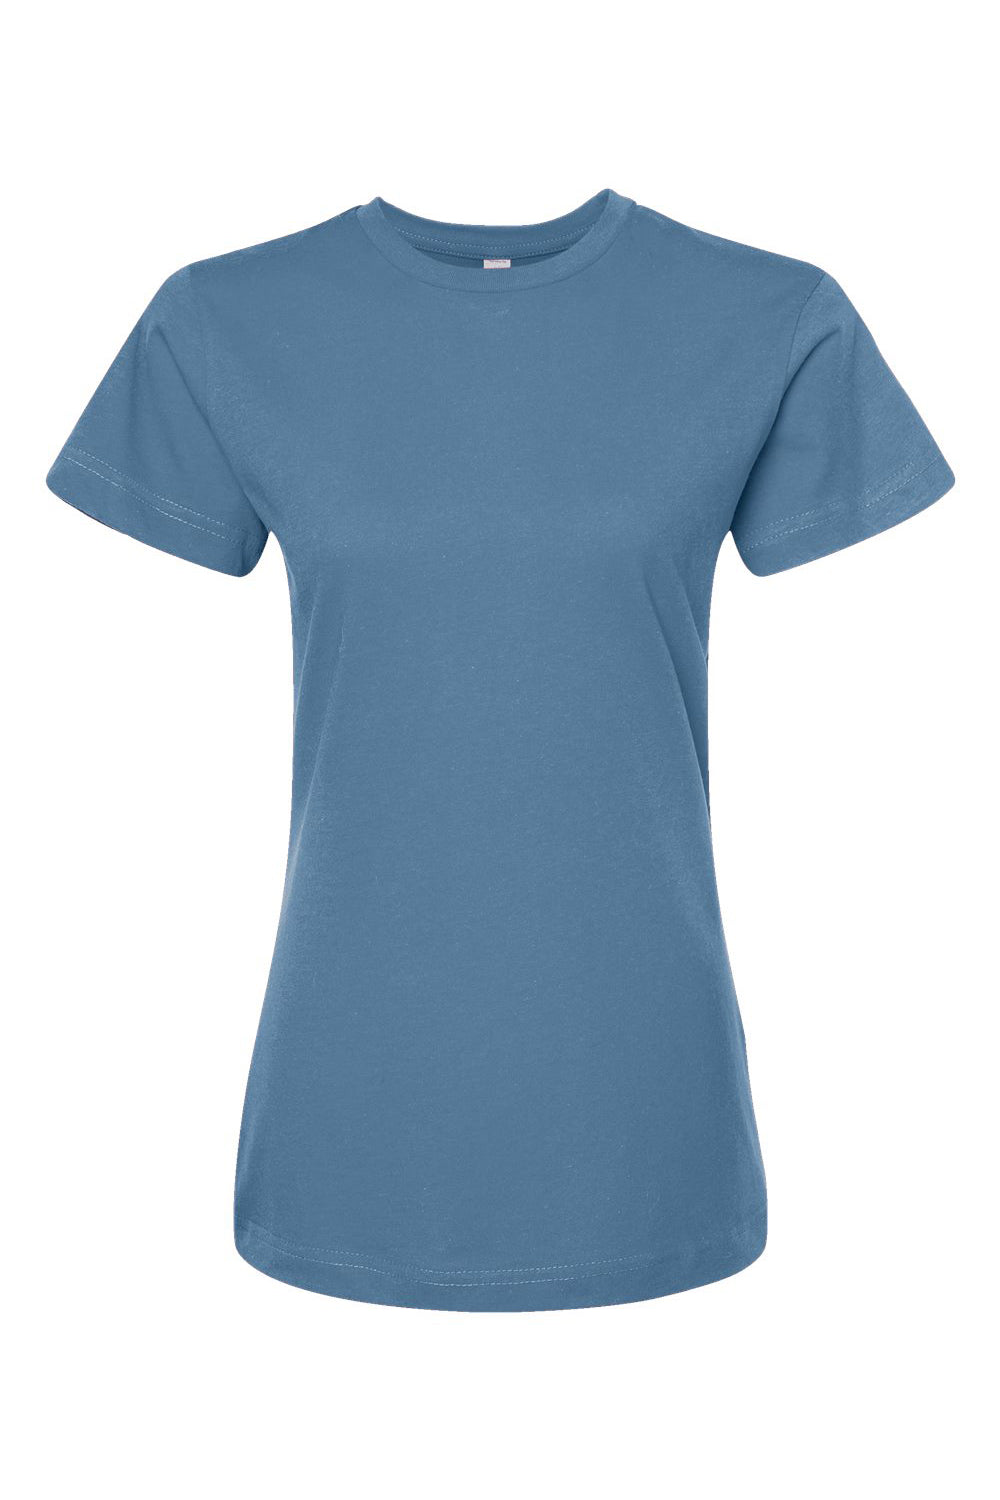 Tultex 216 Womens Fine Jersey Classic Fit Short Sleeve Crewneck T-Shirt Slate Blue Flat Front